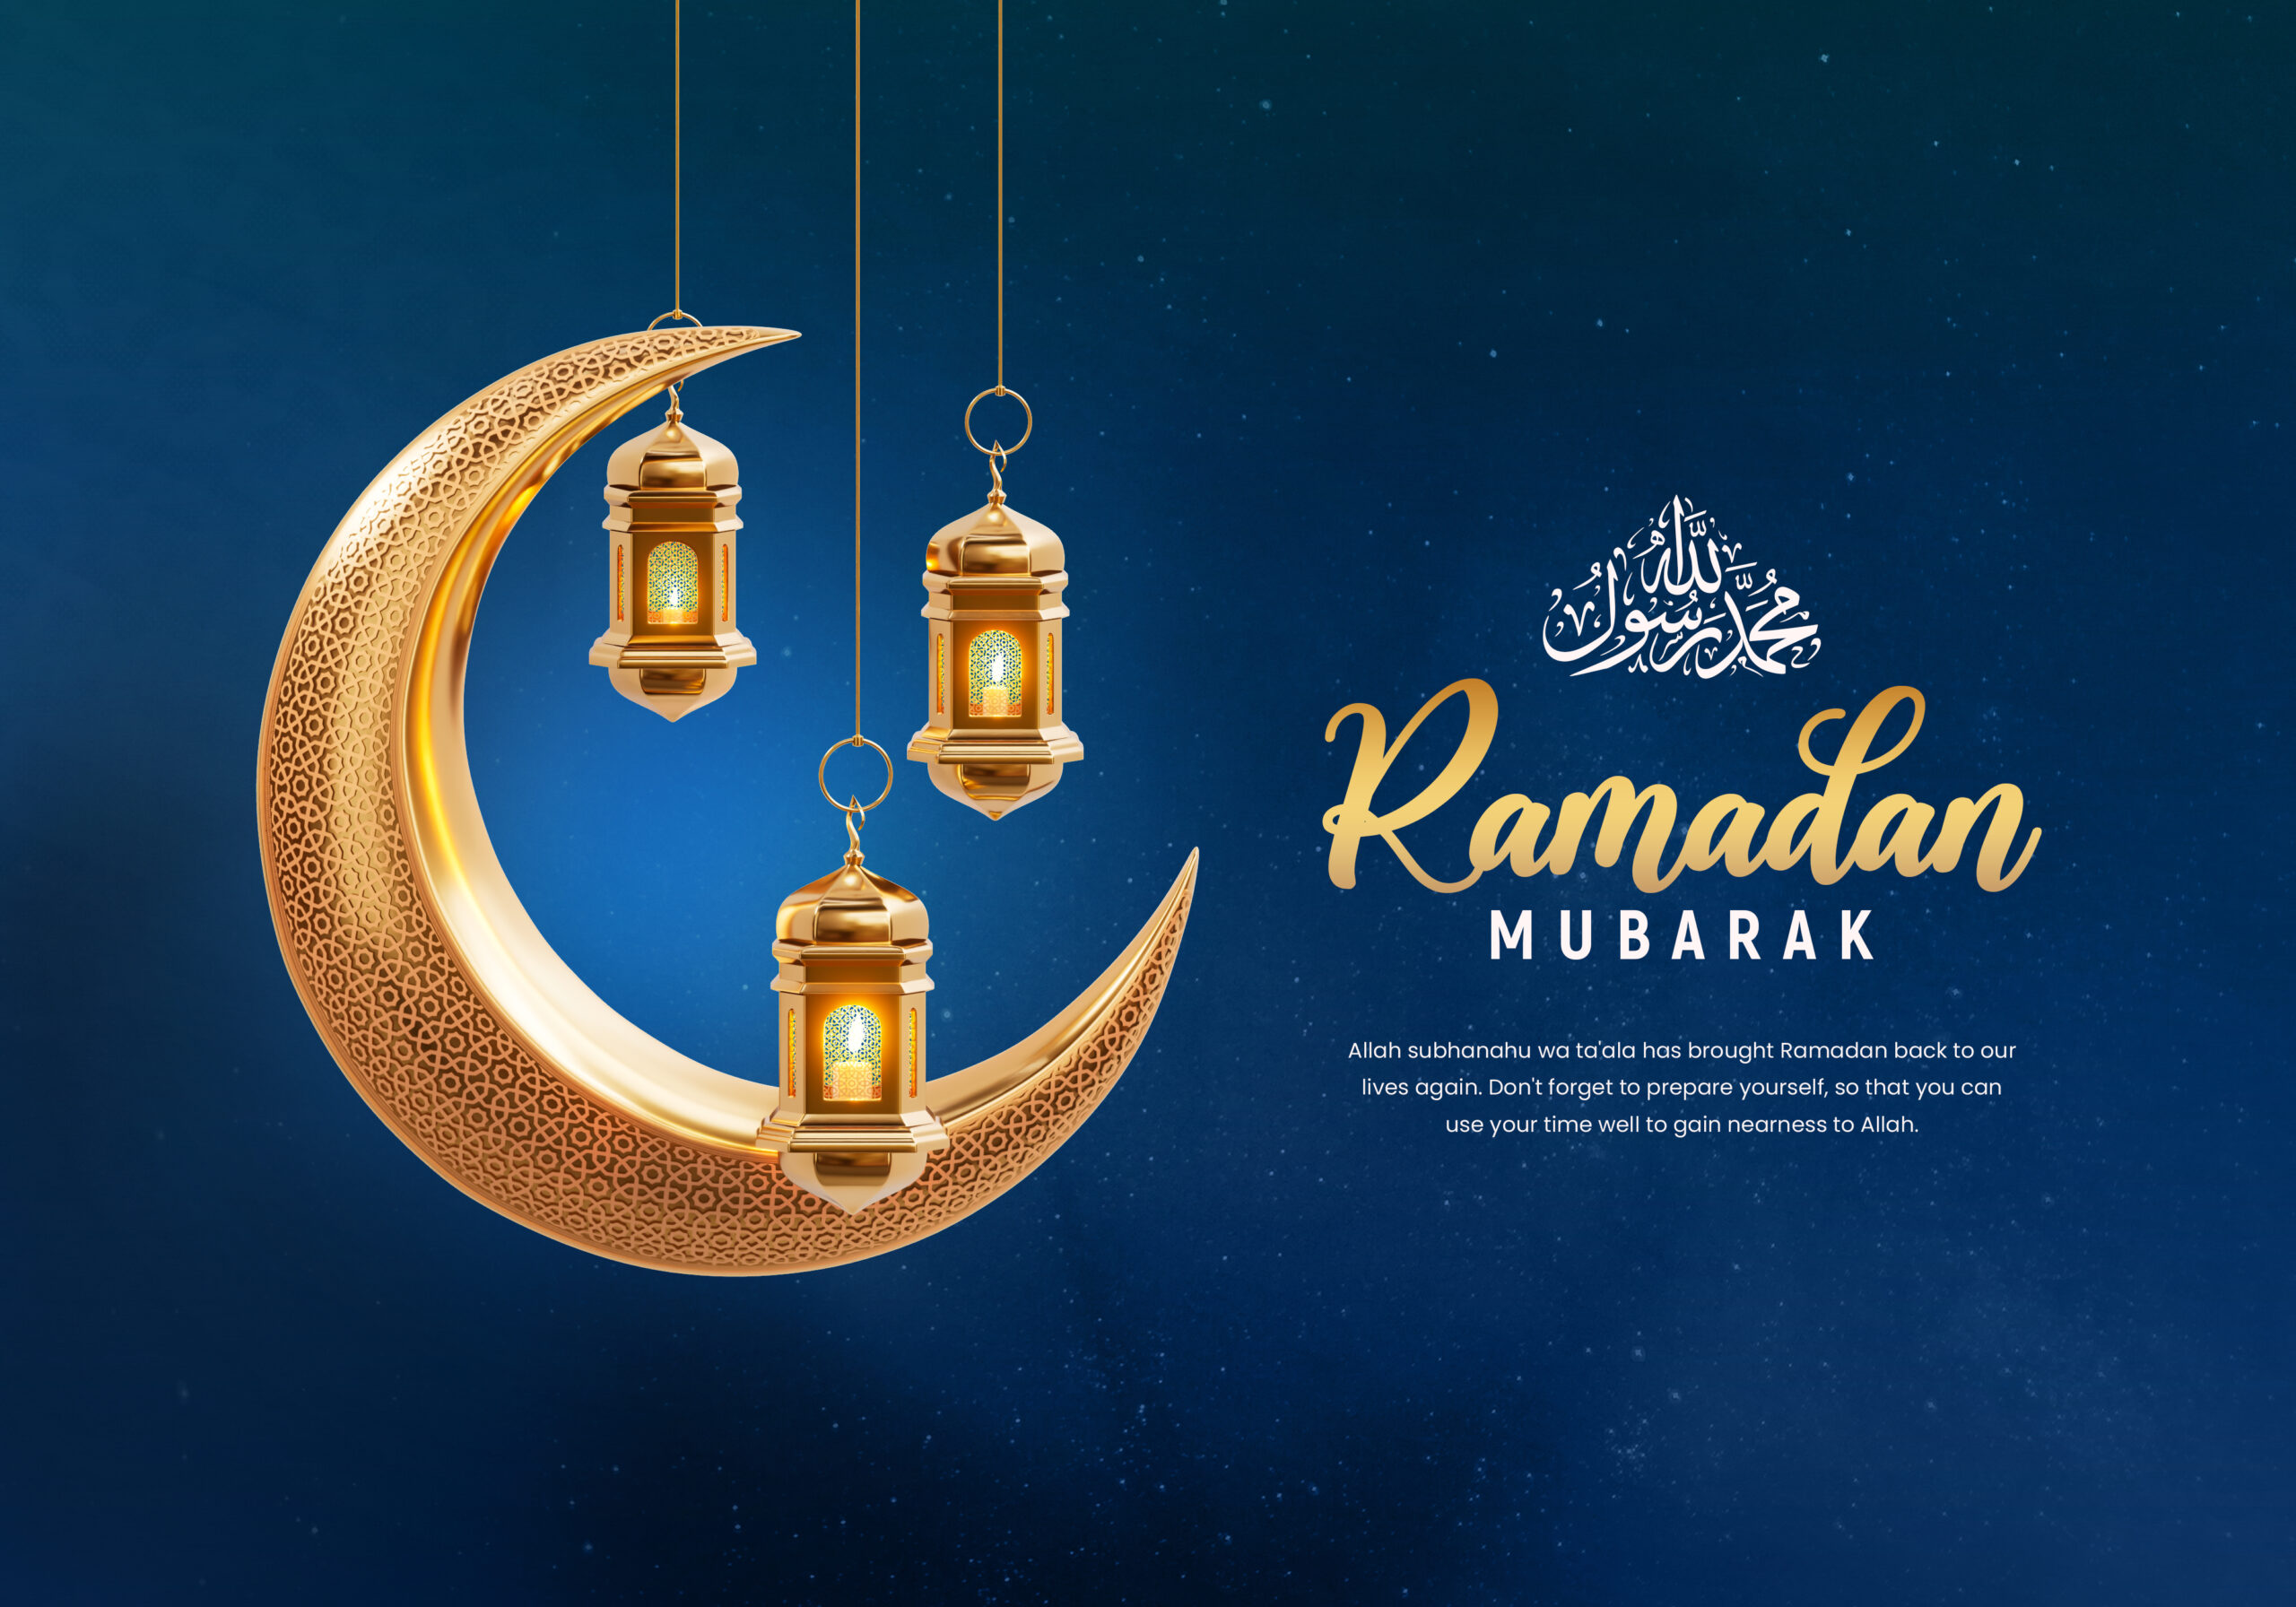 Ramadan Mubarak! Lessons from the Gulf